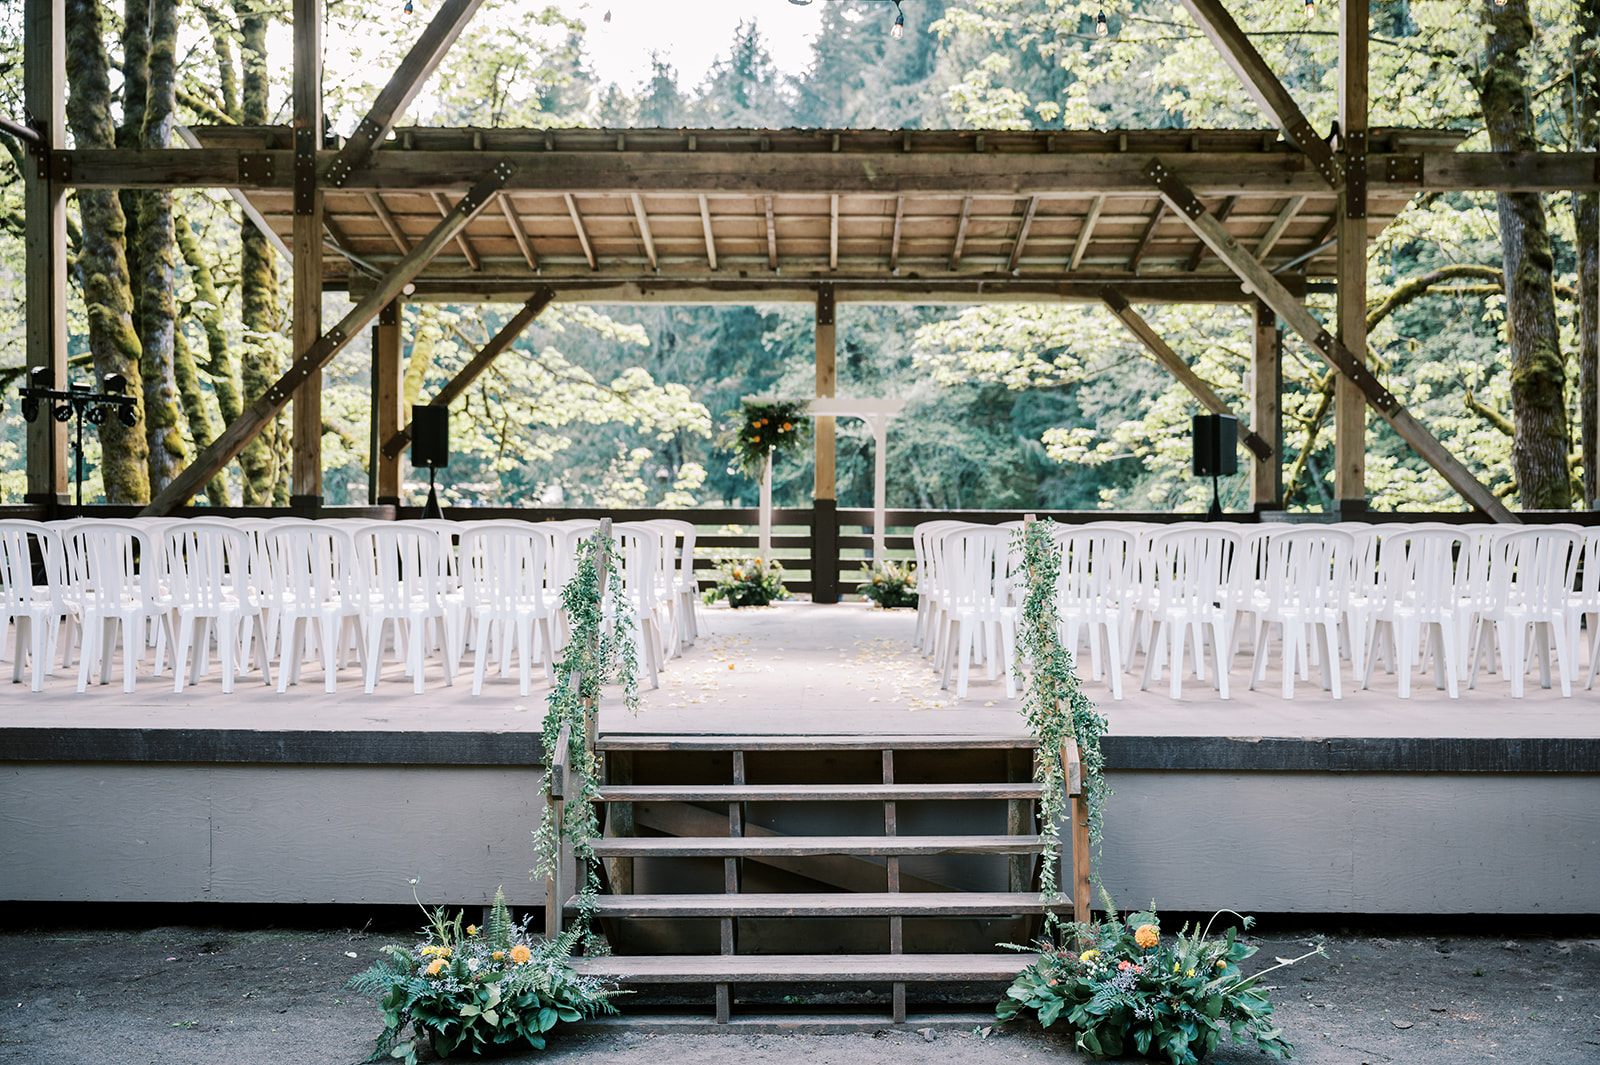 Hornings Hideout Wedding camping wedding venue in Oregon
v